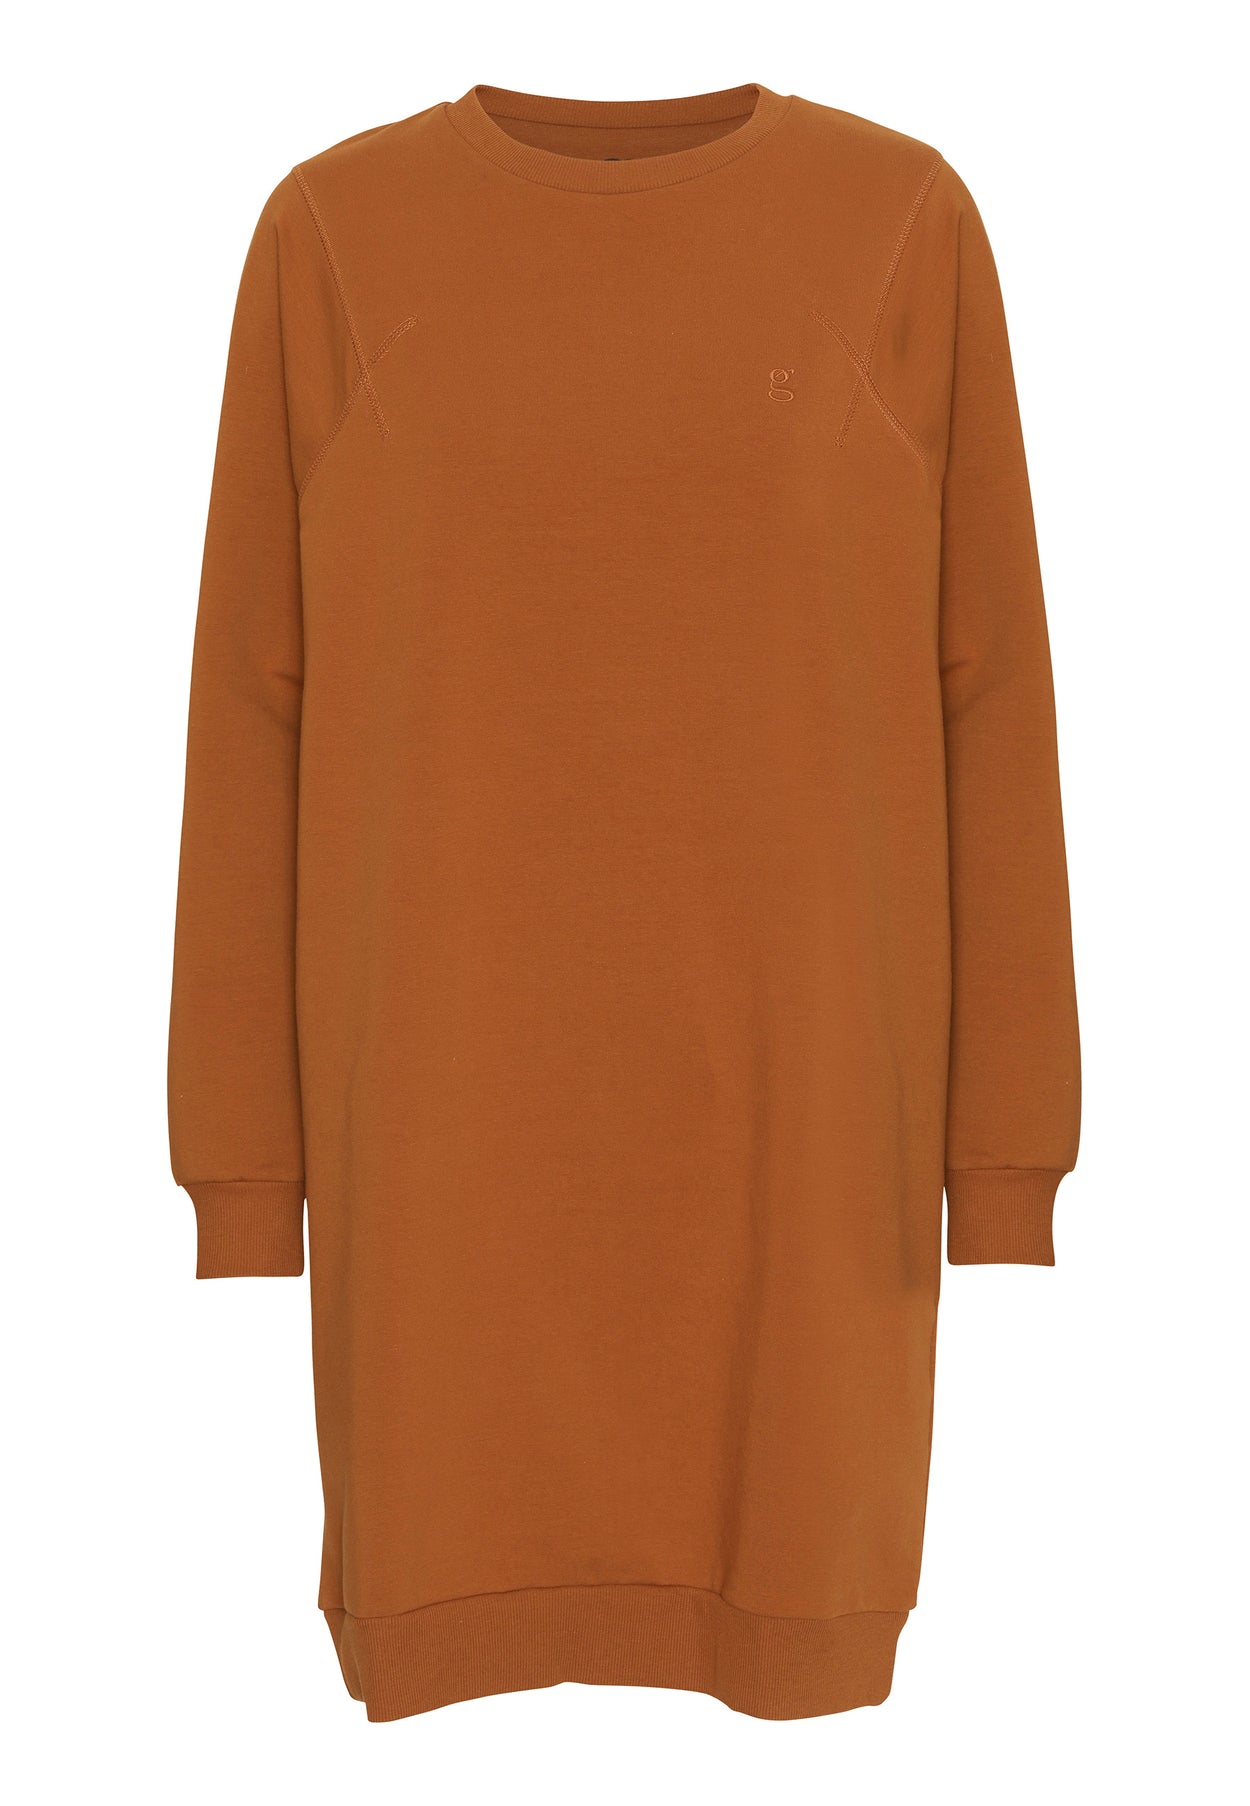 GROBUND Selma sweatshirten - den lange i brændt orange